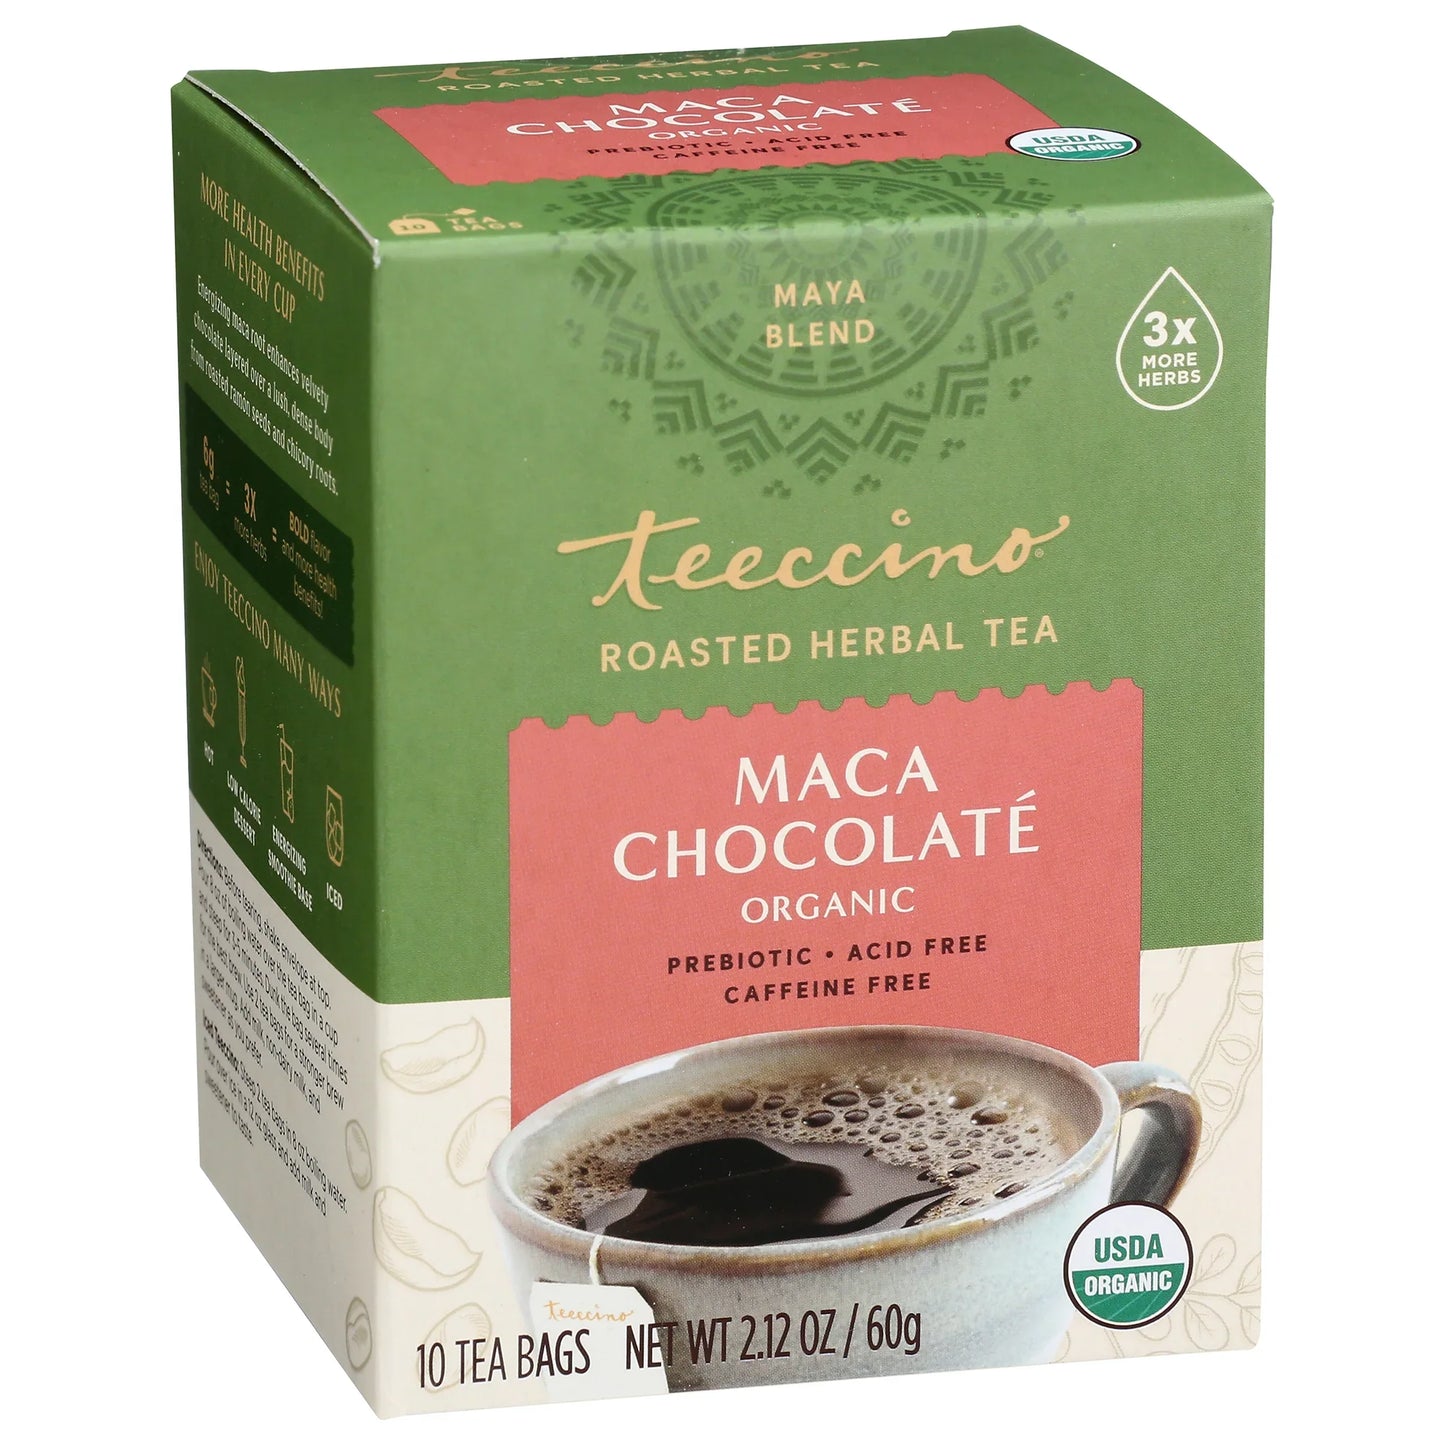 Maca Chocolate Roasted Herbal Tea